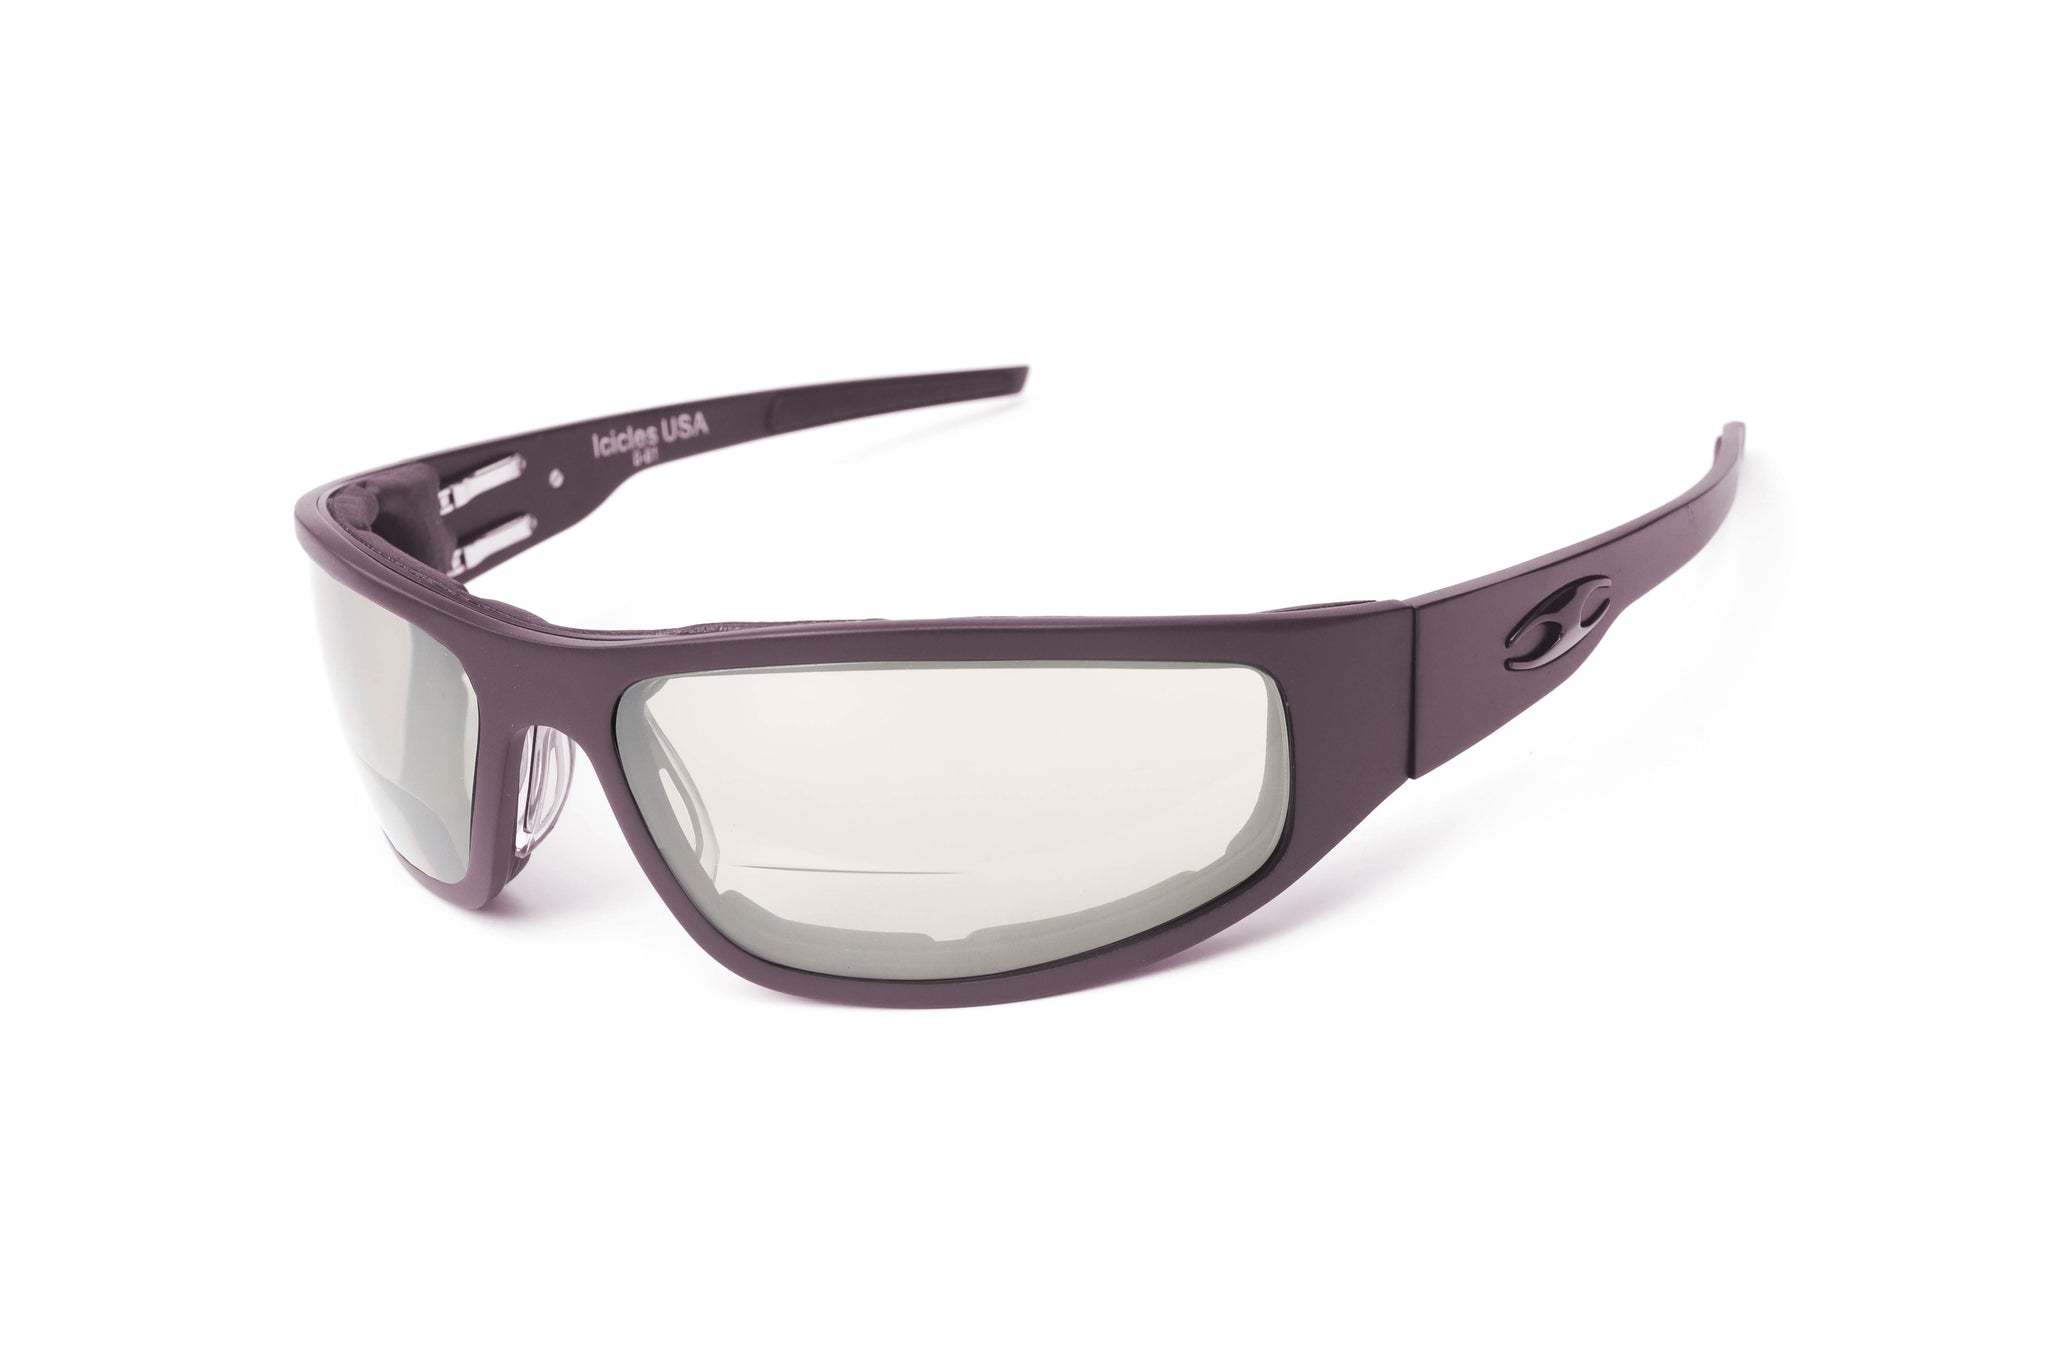 Icicles Eyewear “Bagger” Gunmetal Motorcycle Sunglasses (Smooth) No - Single / Transition - Grey / No